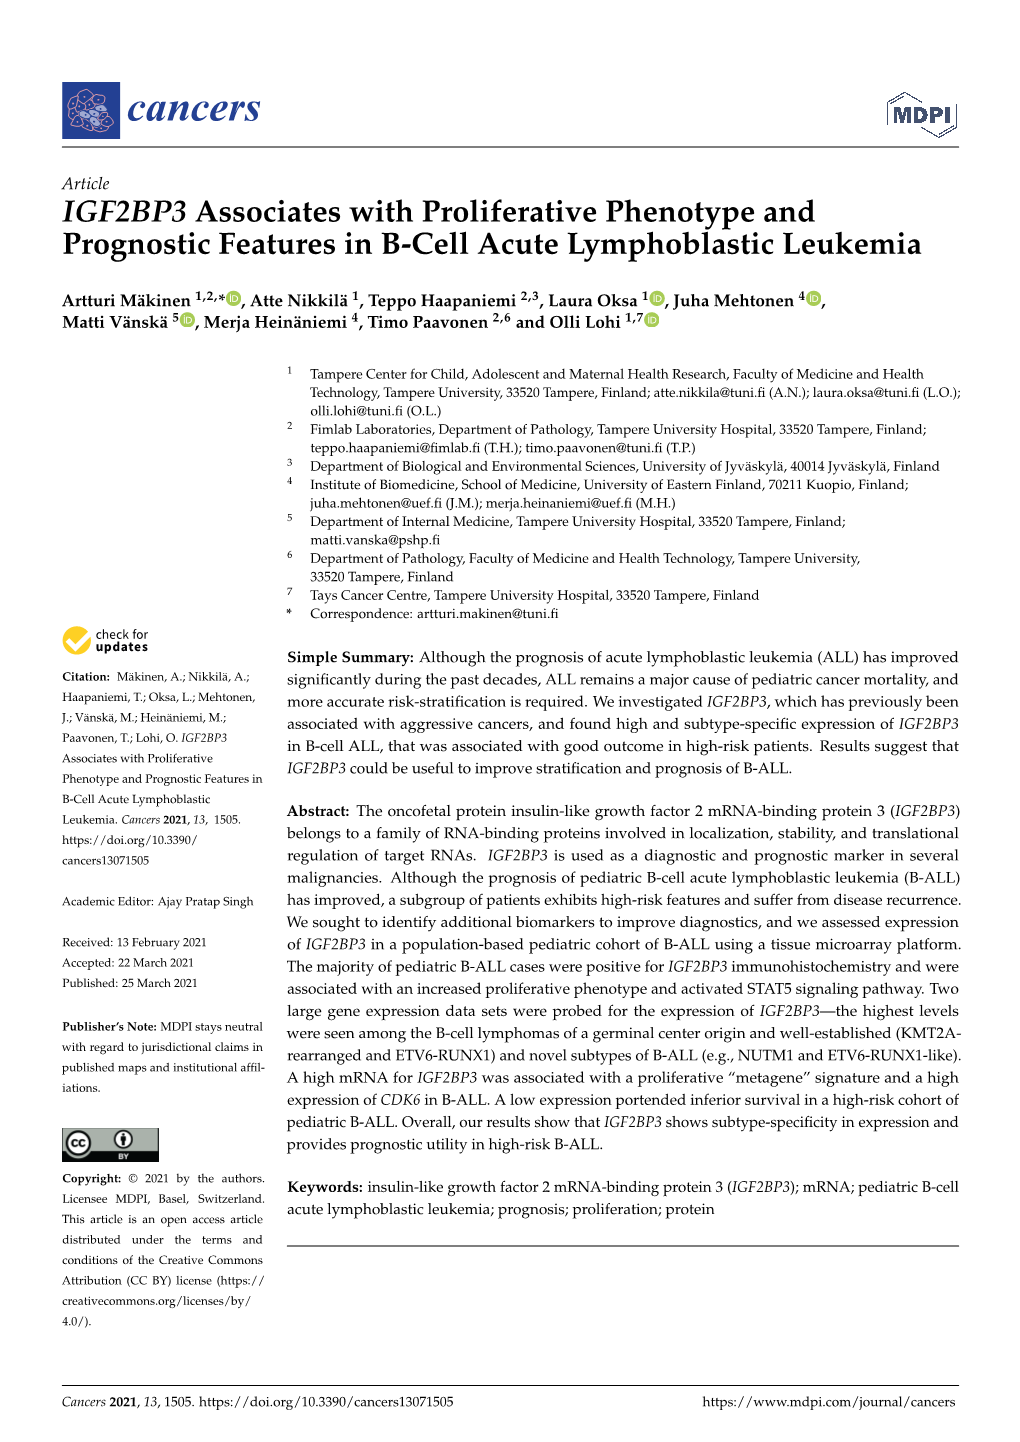 IGF2BP3 Associates with Proliferative Phenotype and Prognostic Features in B-Cell Acute Lymphoblastic Leukemia